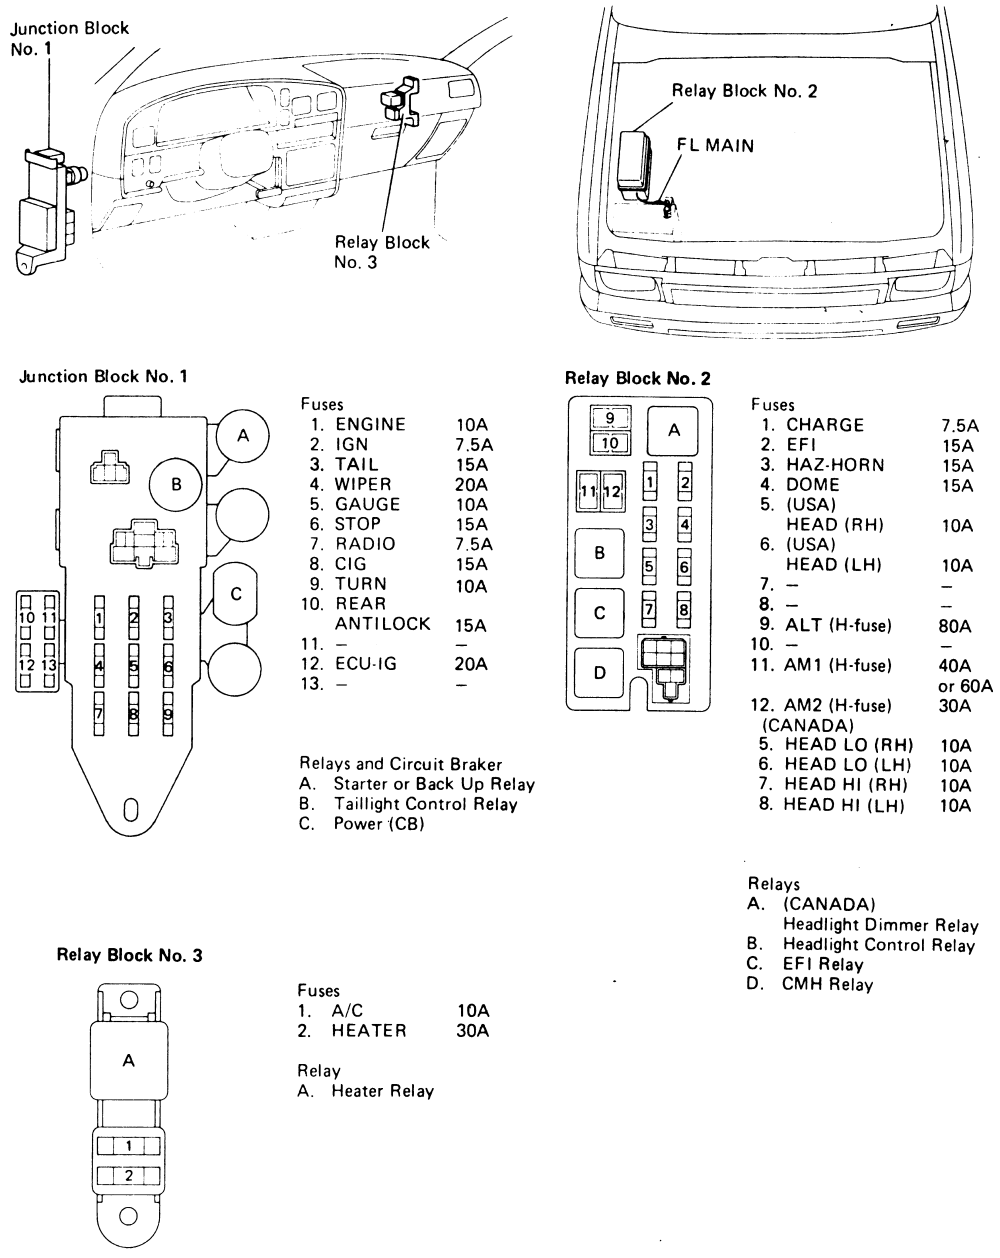 wiring diagram 1992 toyota 4runner - Wiring Diagram and ...